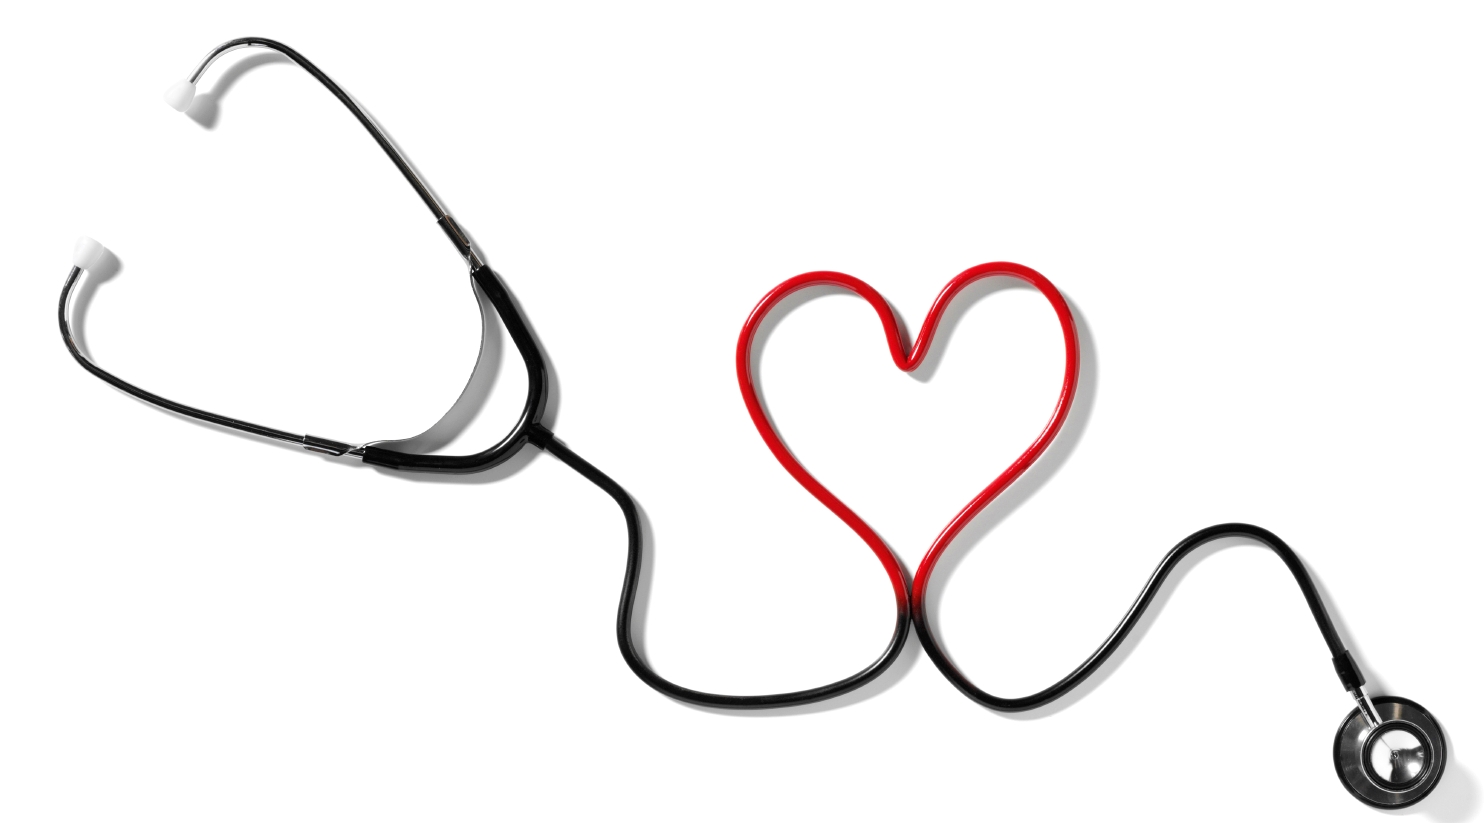 Stethoscope heart clipart.